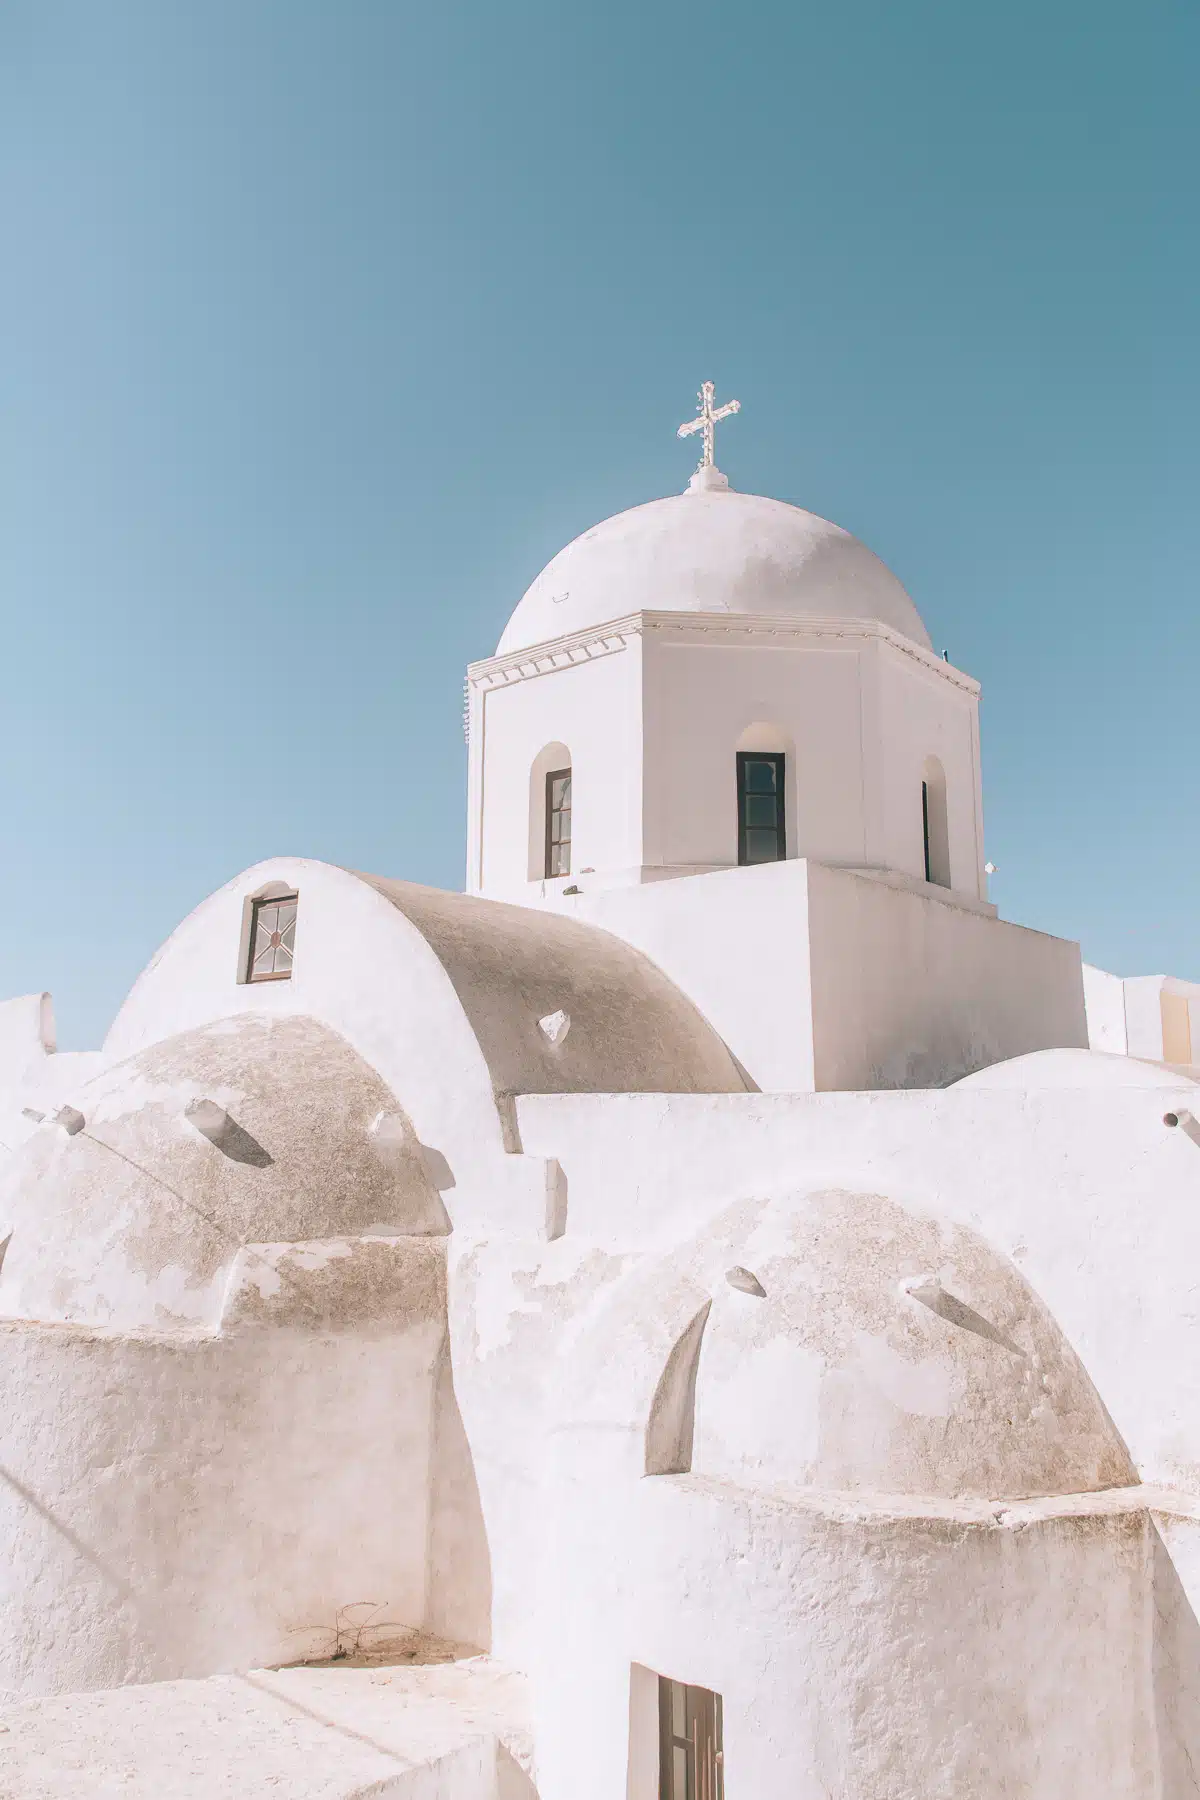 Exploring Megalochori Santorini, by travel blogger What The Fab